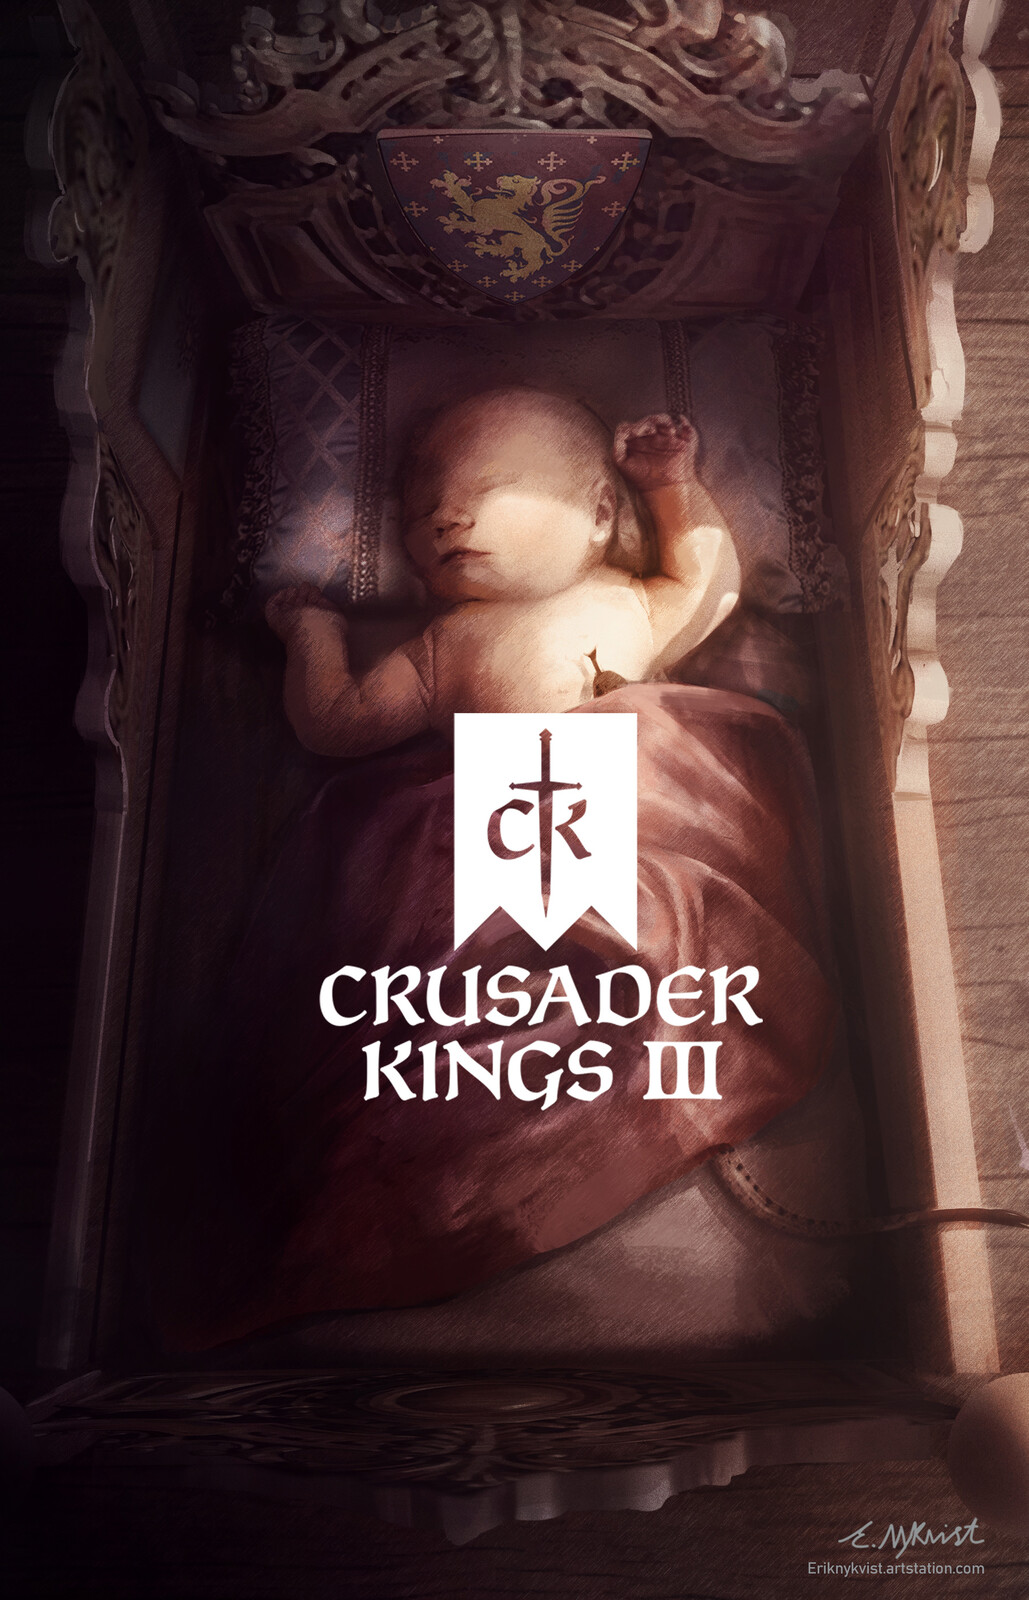 Crusader Kings 3 Trailer Concept